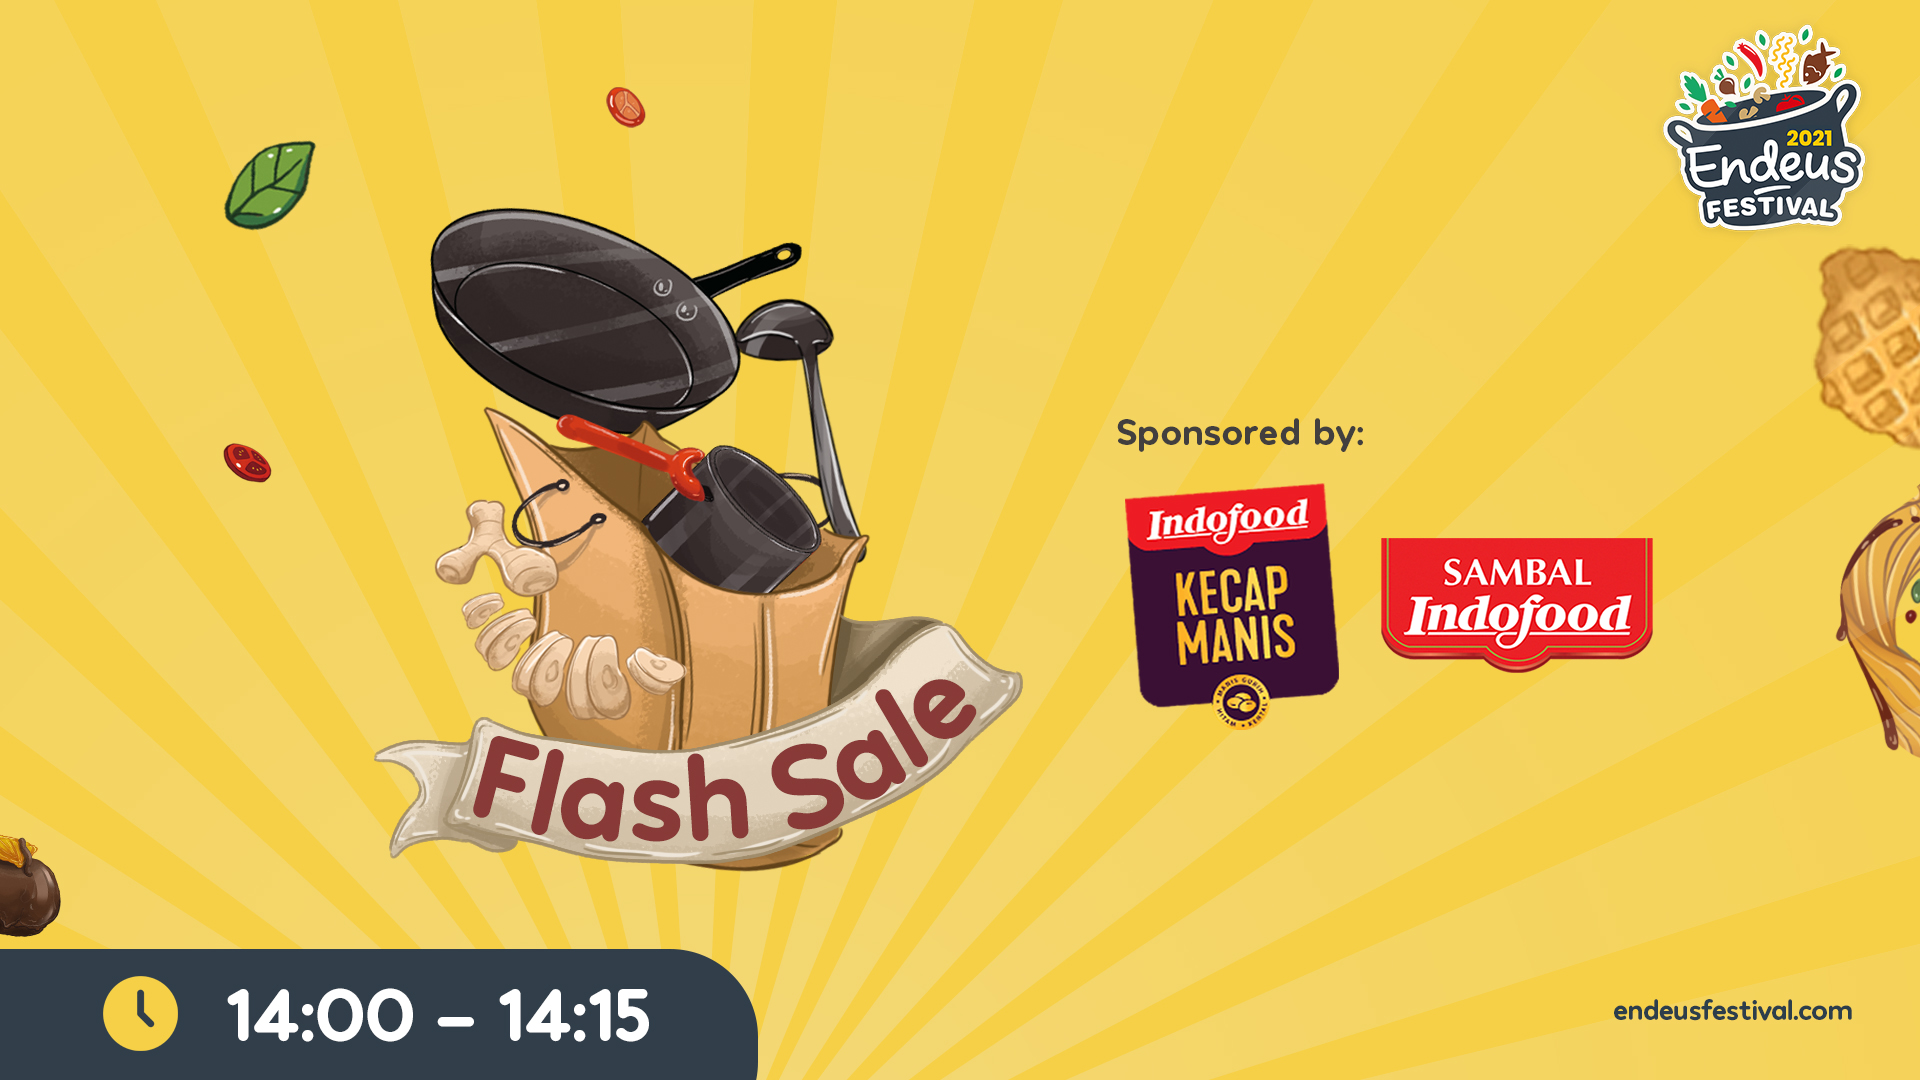 Flash Sale Sponsored by Kecap Manis Indofood & Sambal Indofood